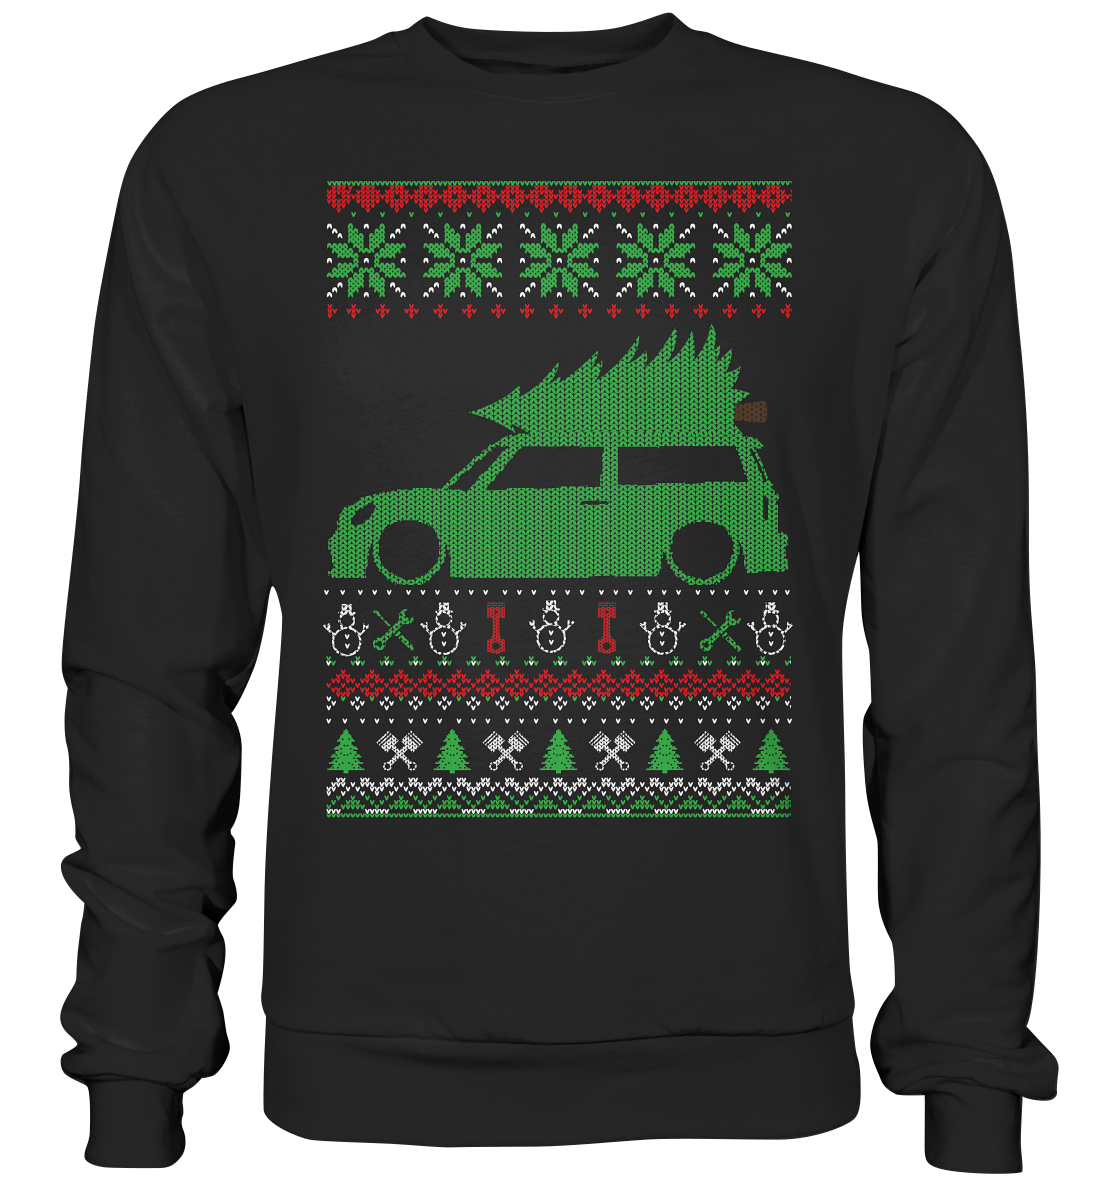 CODUGLY_MGKCR55 - Premium Sweatshirt